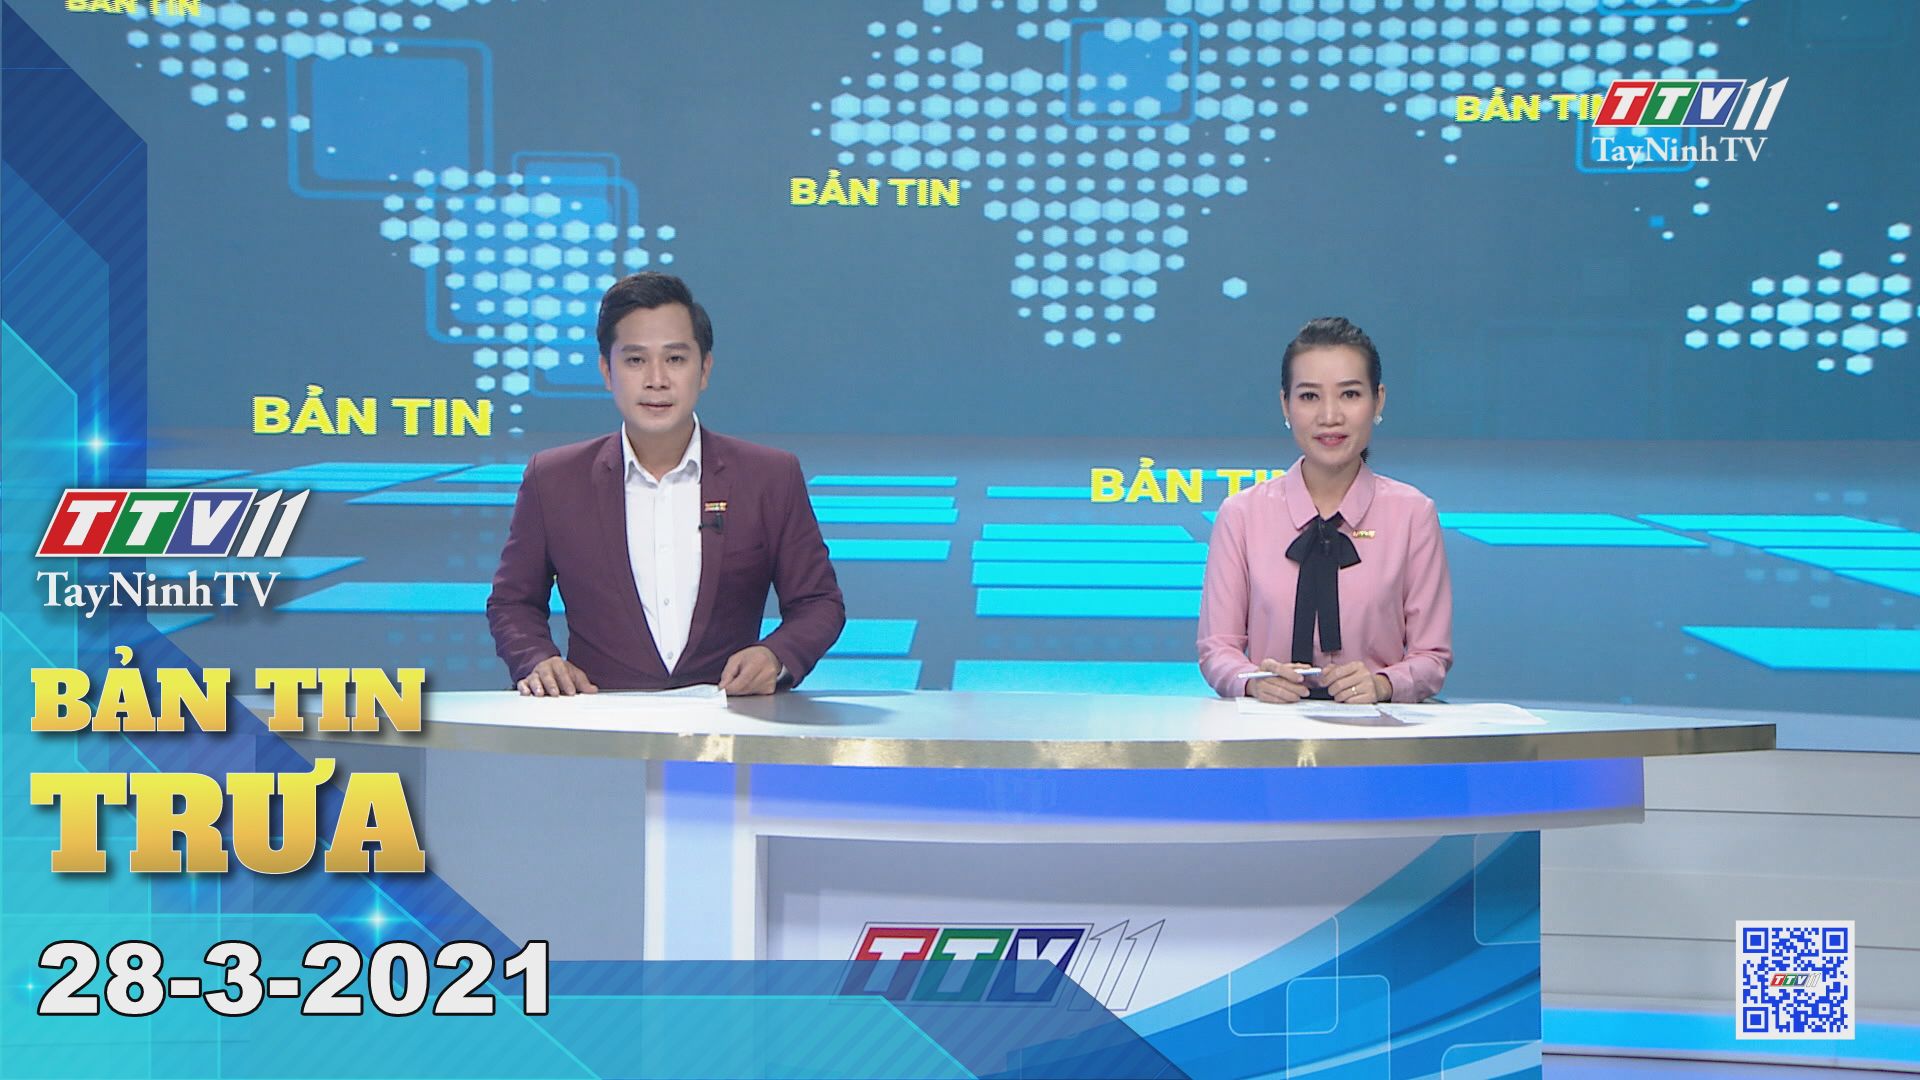 Bản tin trưa 28-3-2021 | Tin tức hôm nay | TayNinhTV